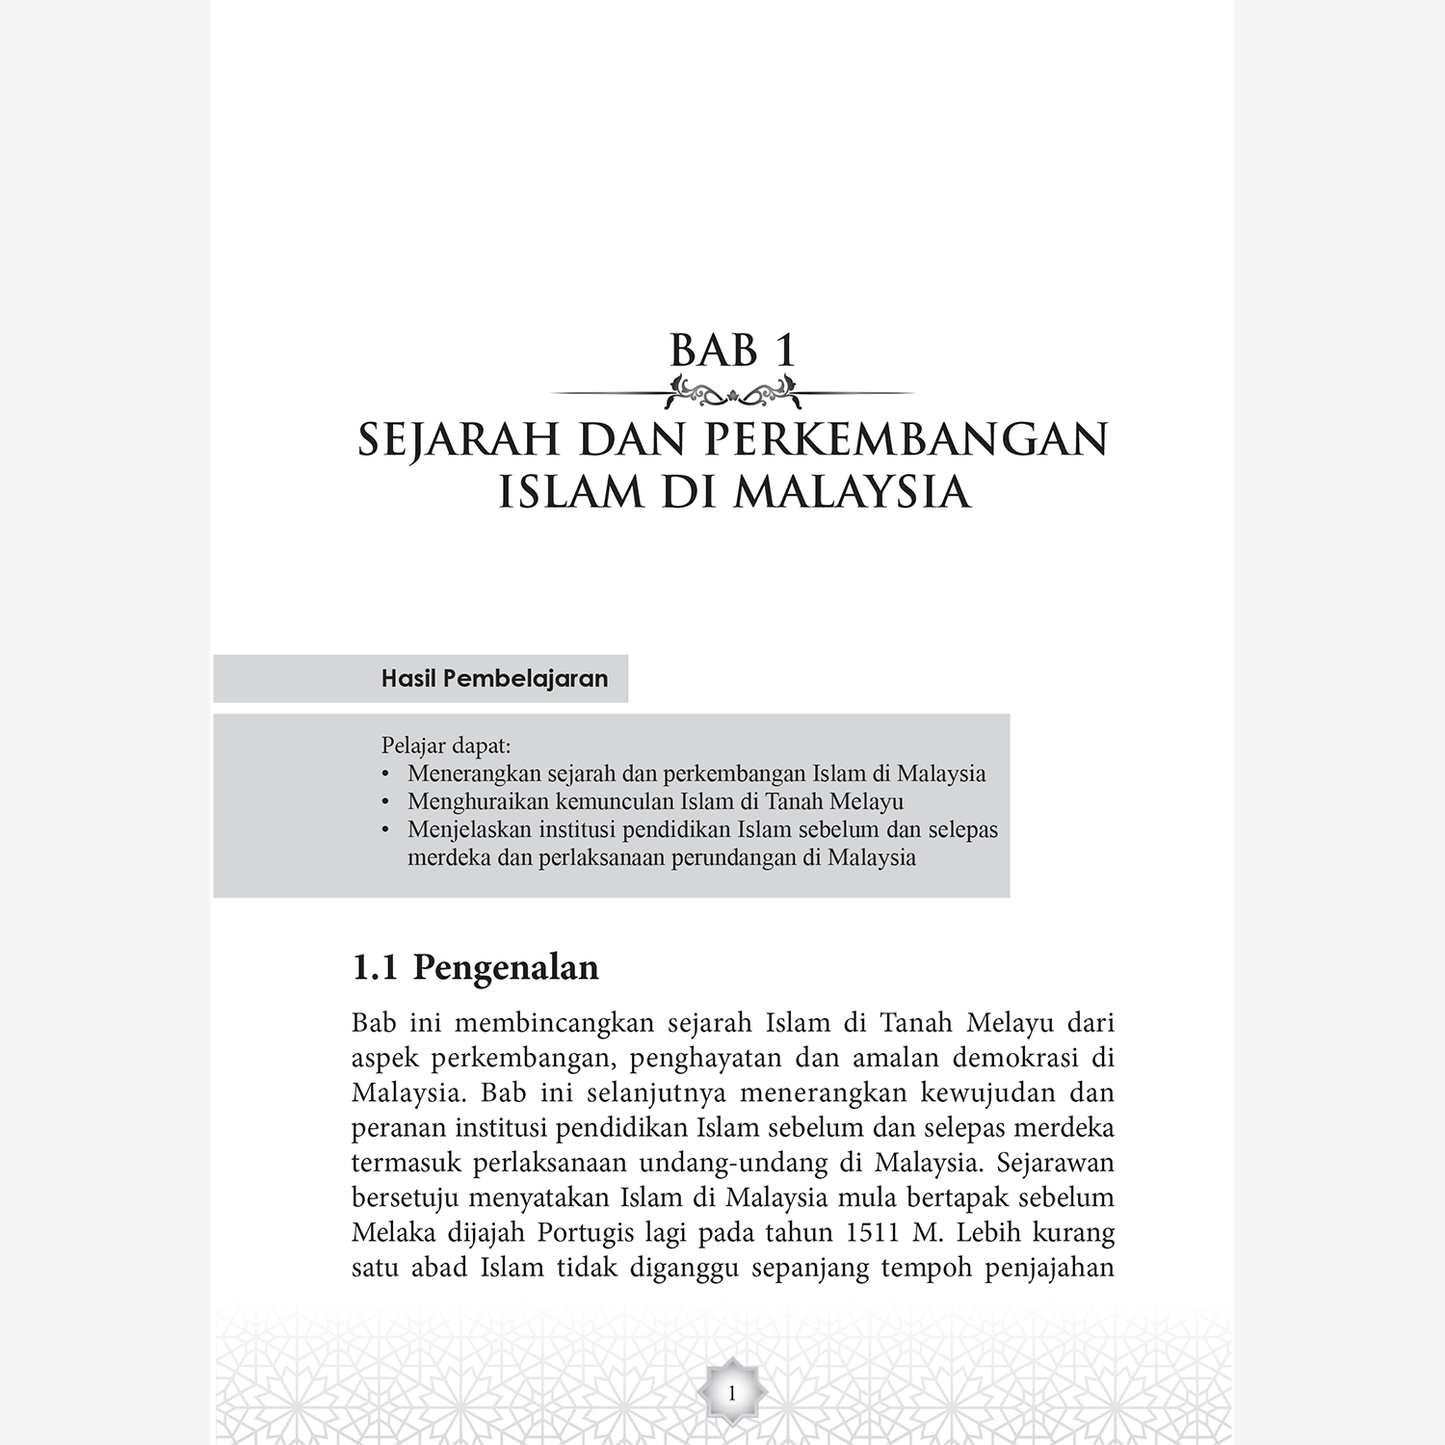 Isu-isu Kontemporari Muslim di Malaysia